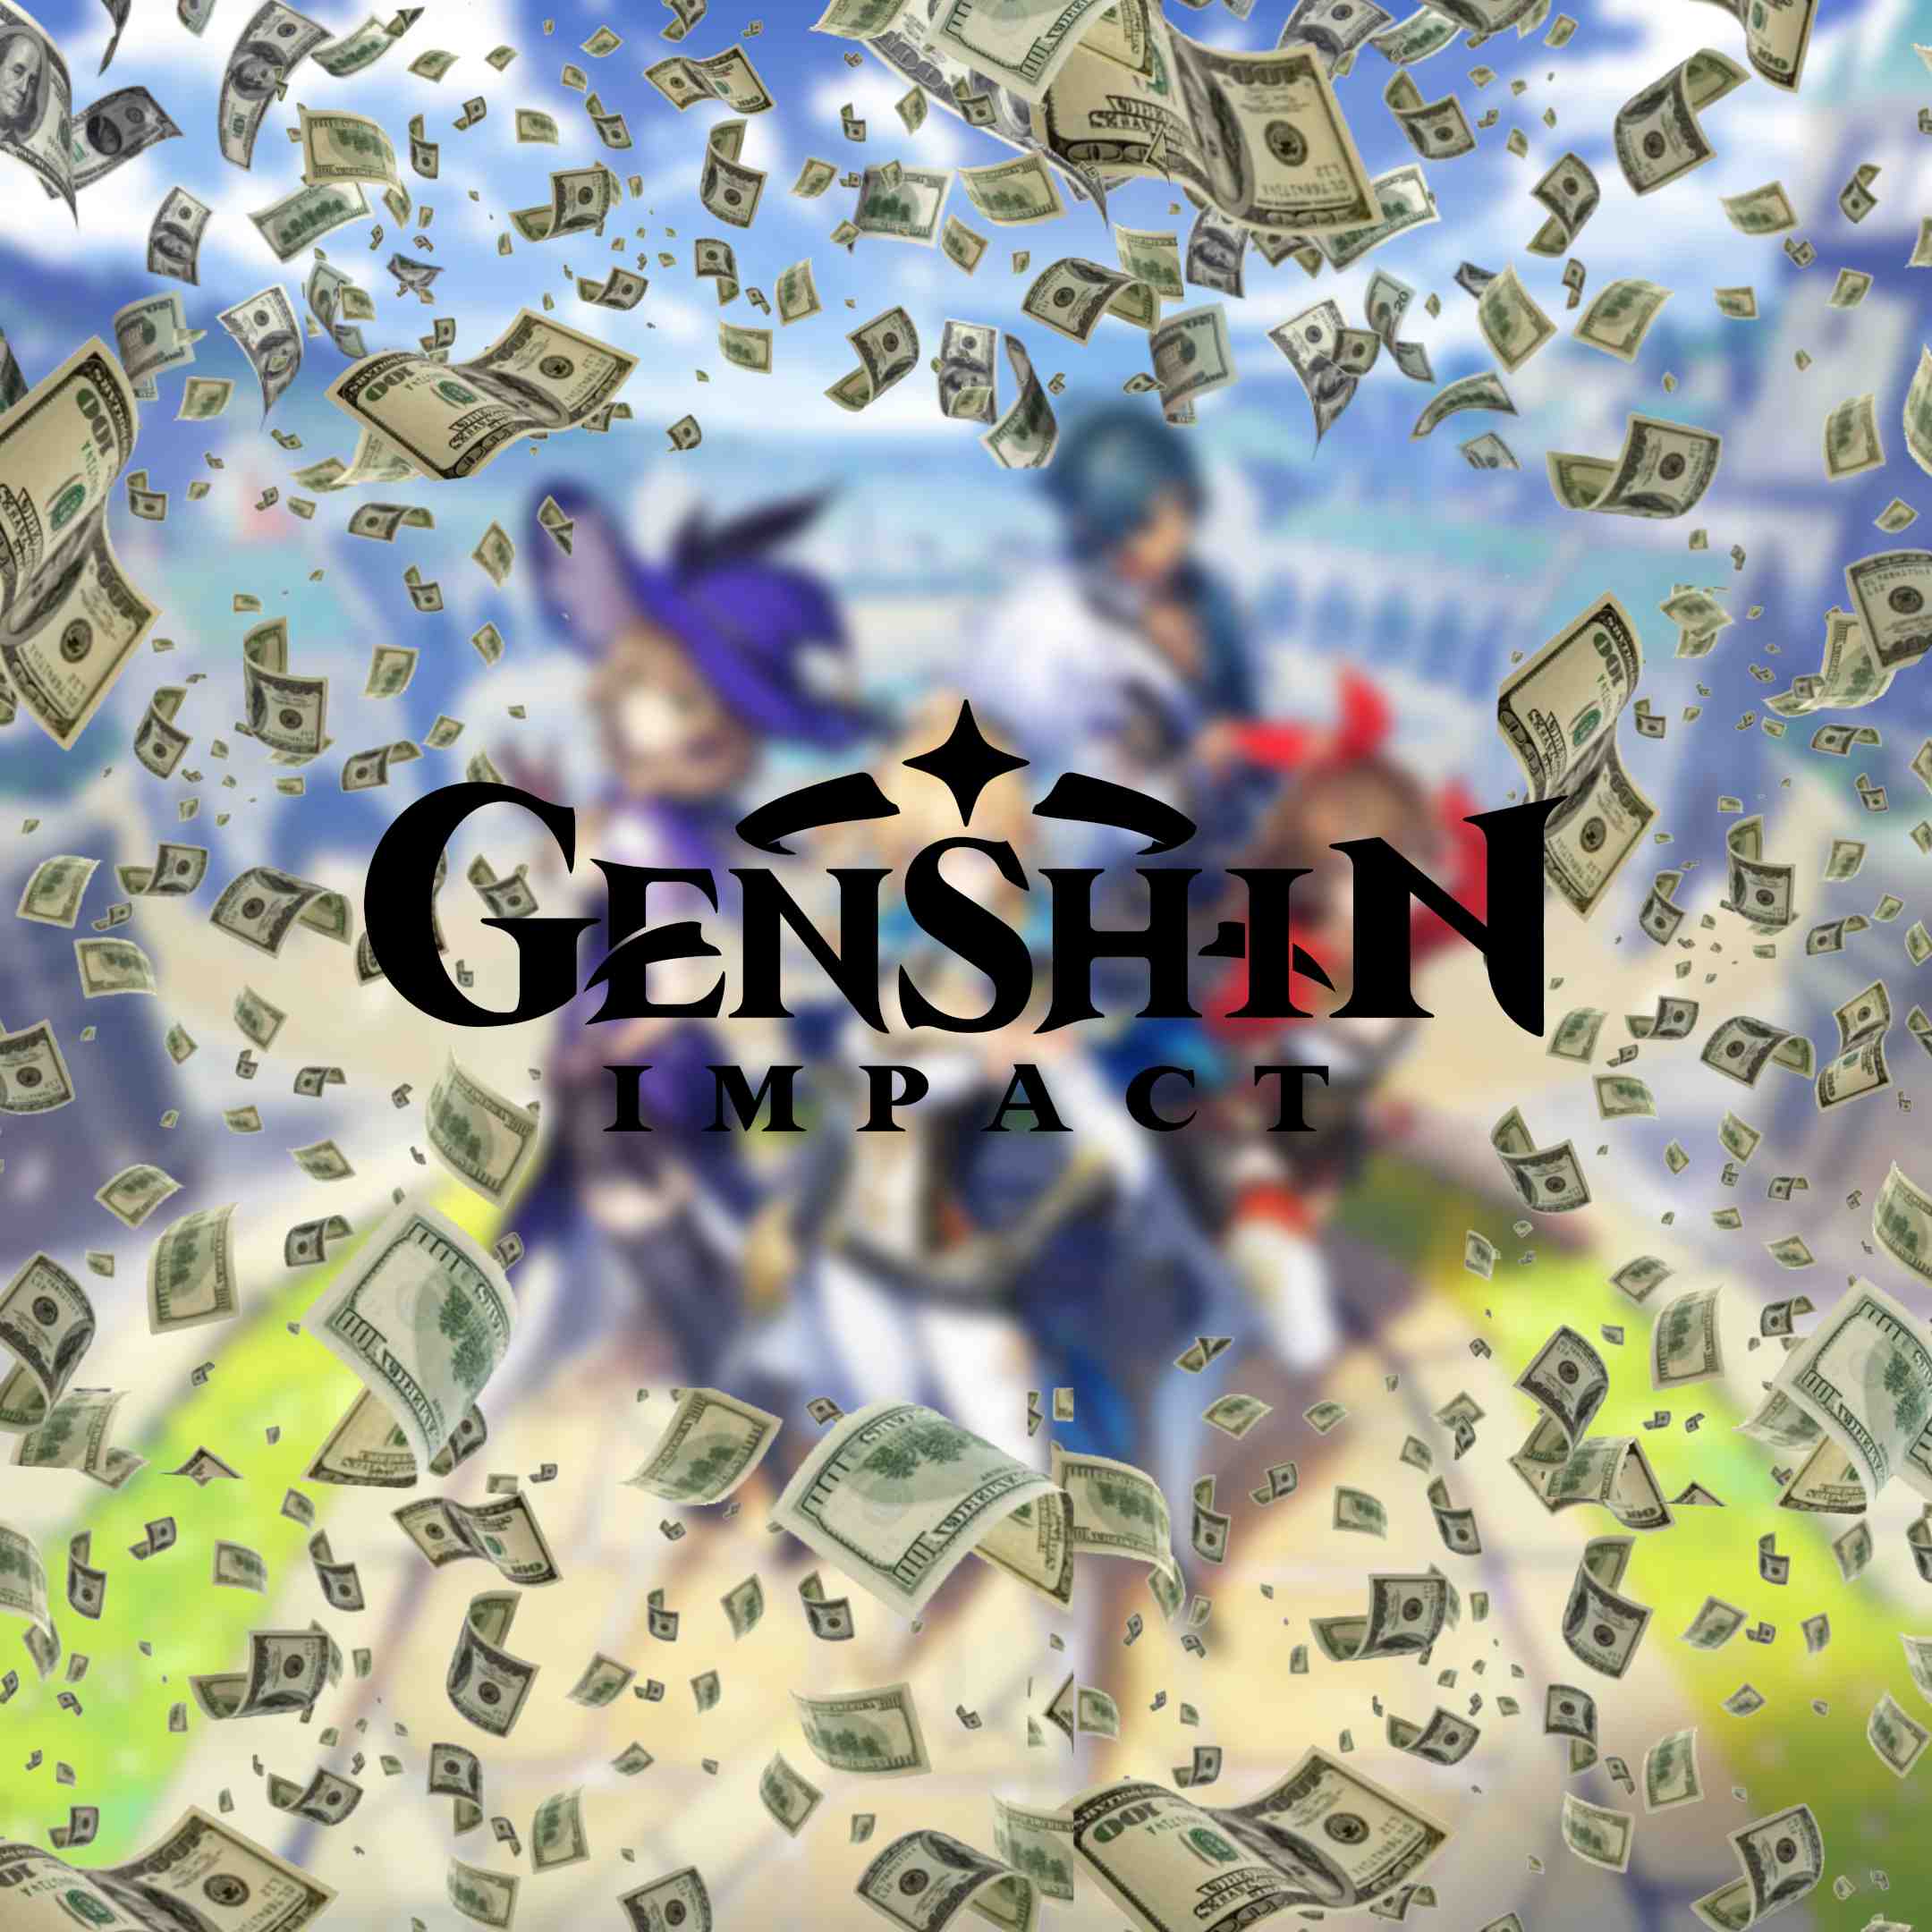 Genshin Impact 3rd highest grossing mobile game